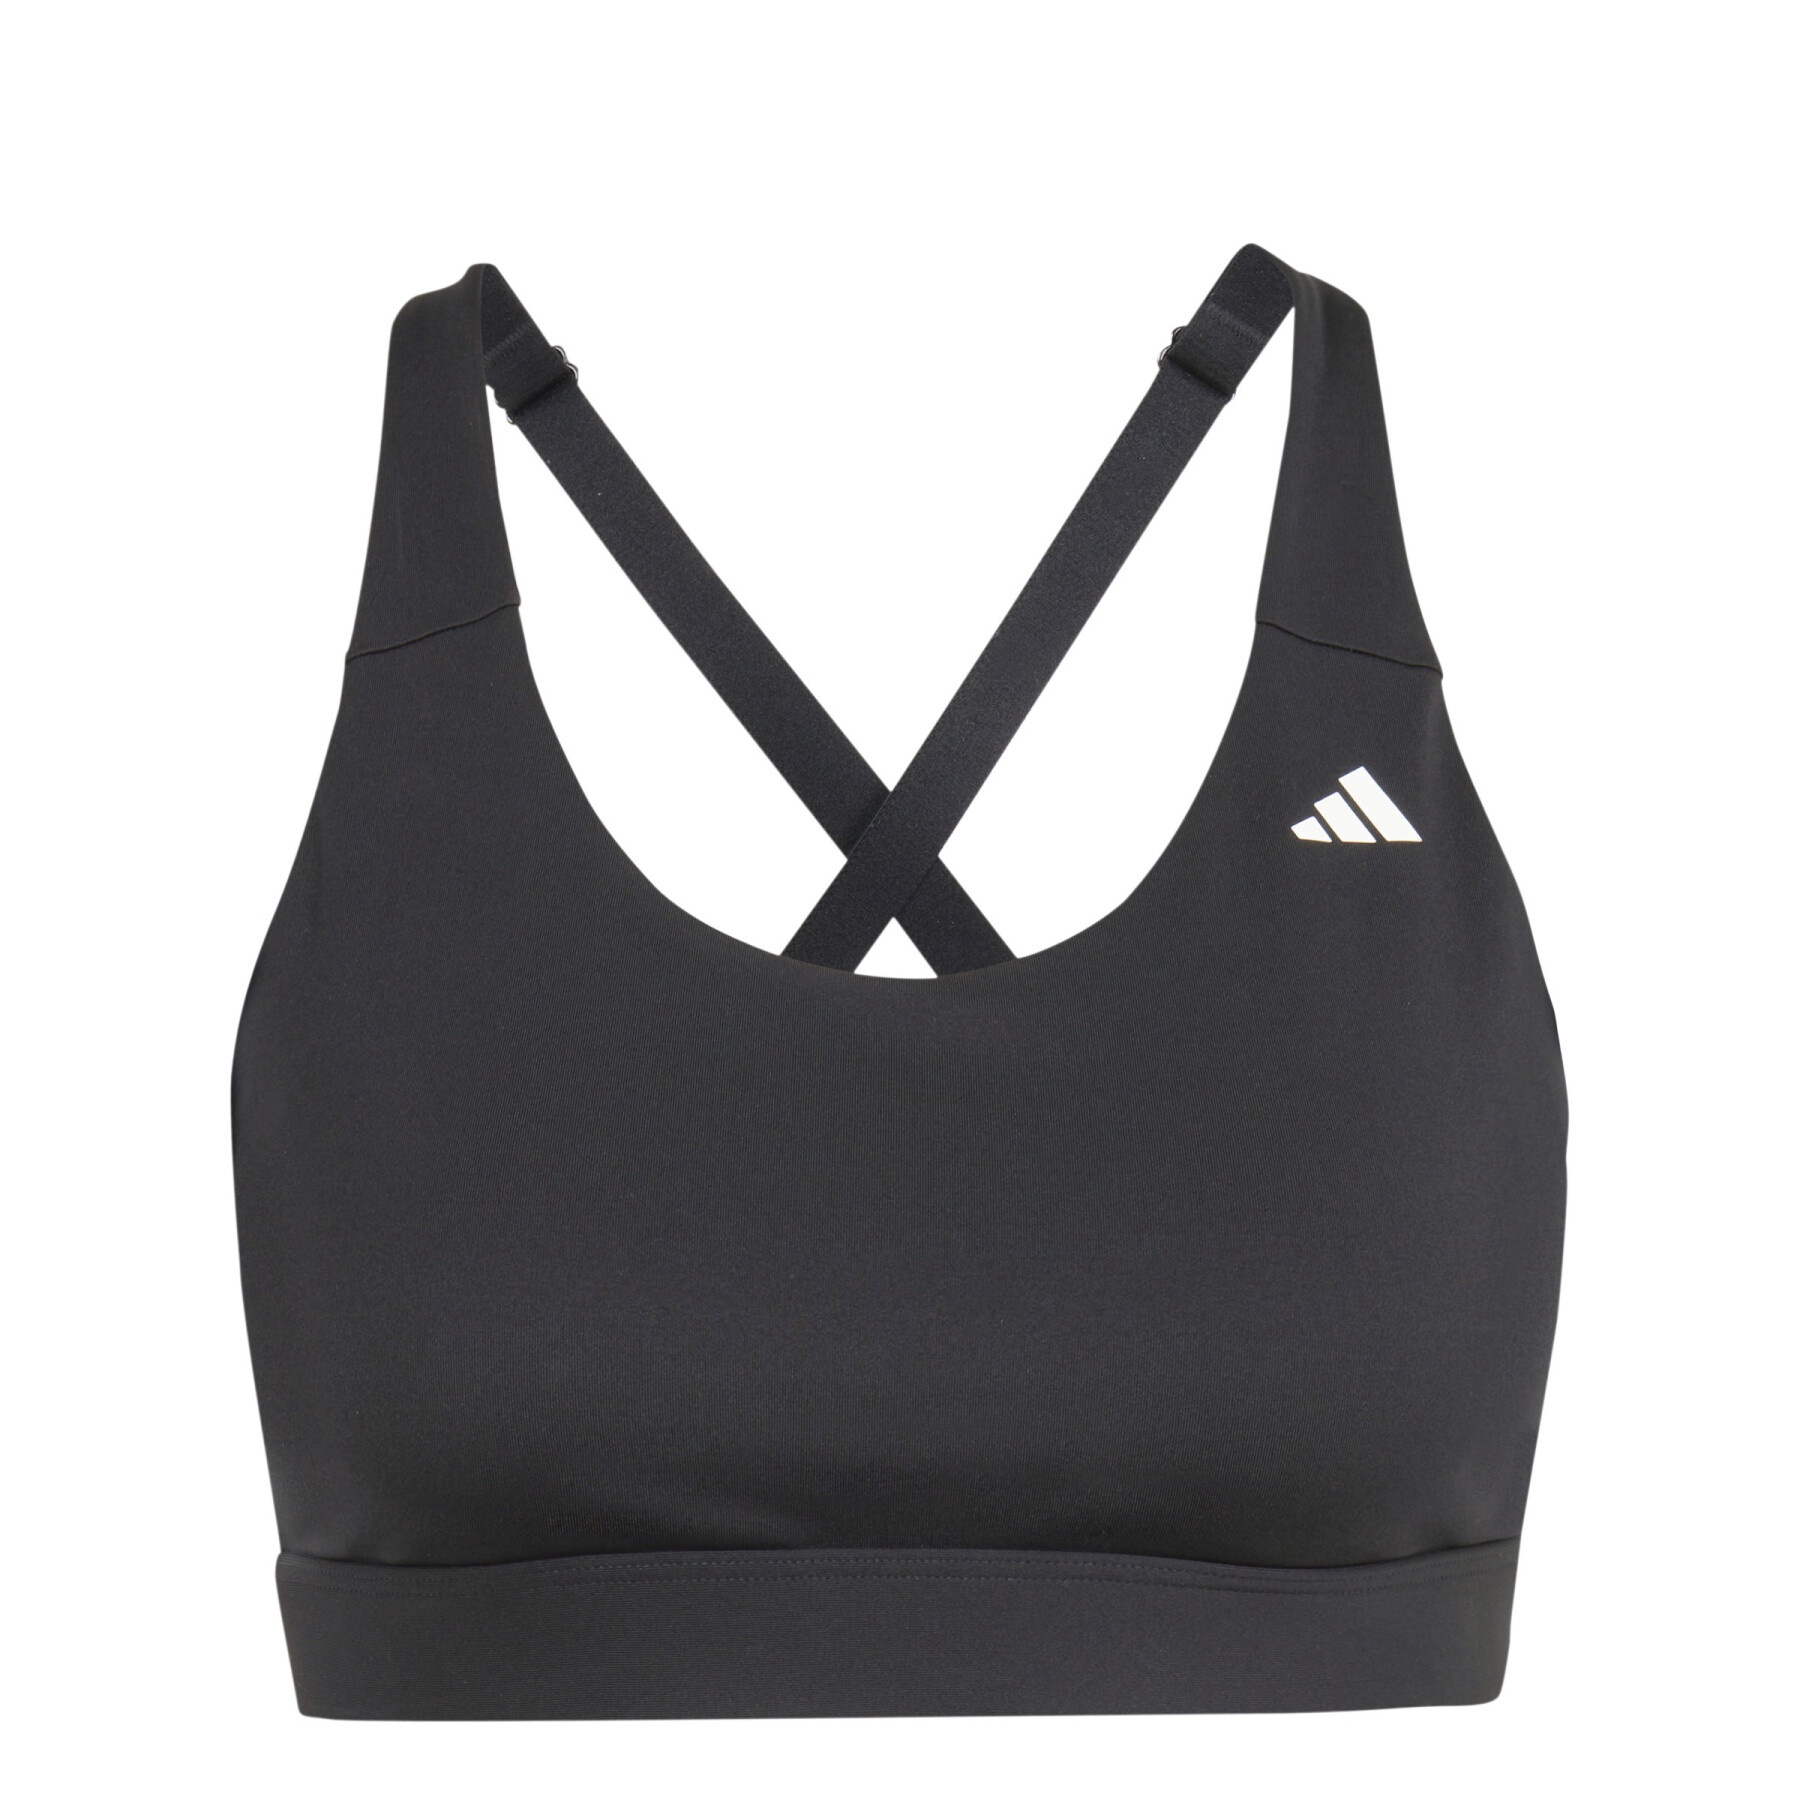 Medium support bra for women adidas Ultimatea Run - Bras - Women's